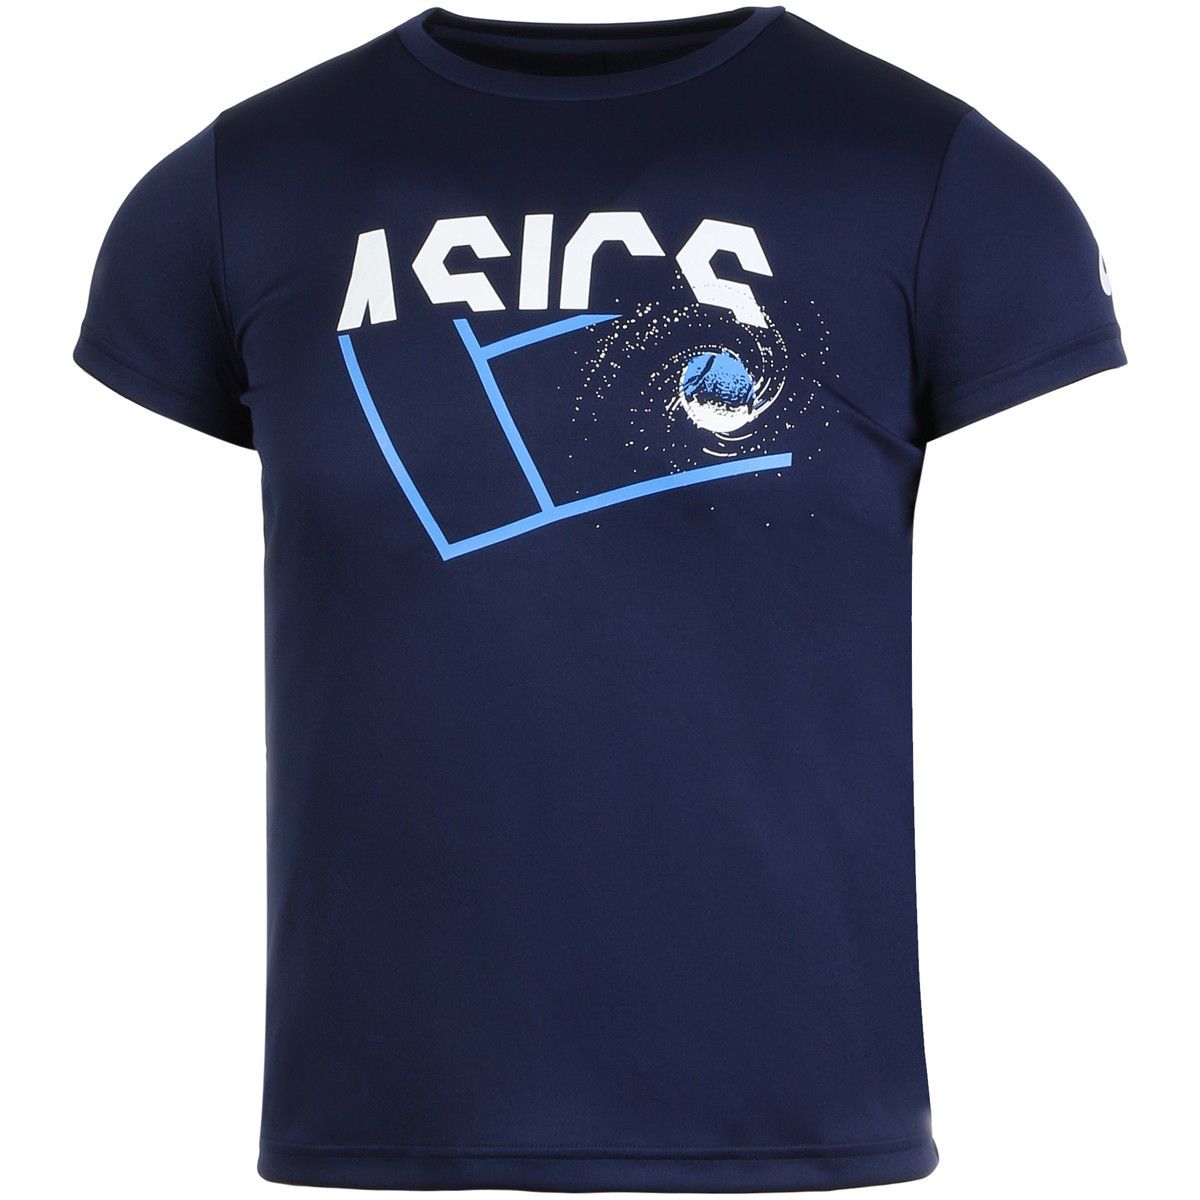 Asics Practice Graphic Men's Tennis T-Shirt 2041A090-401